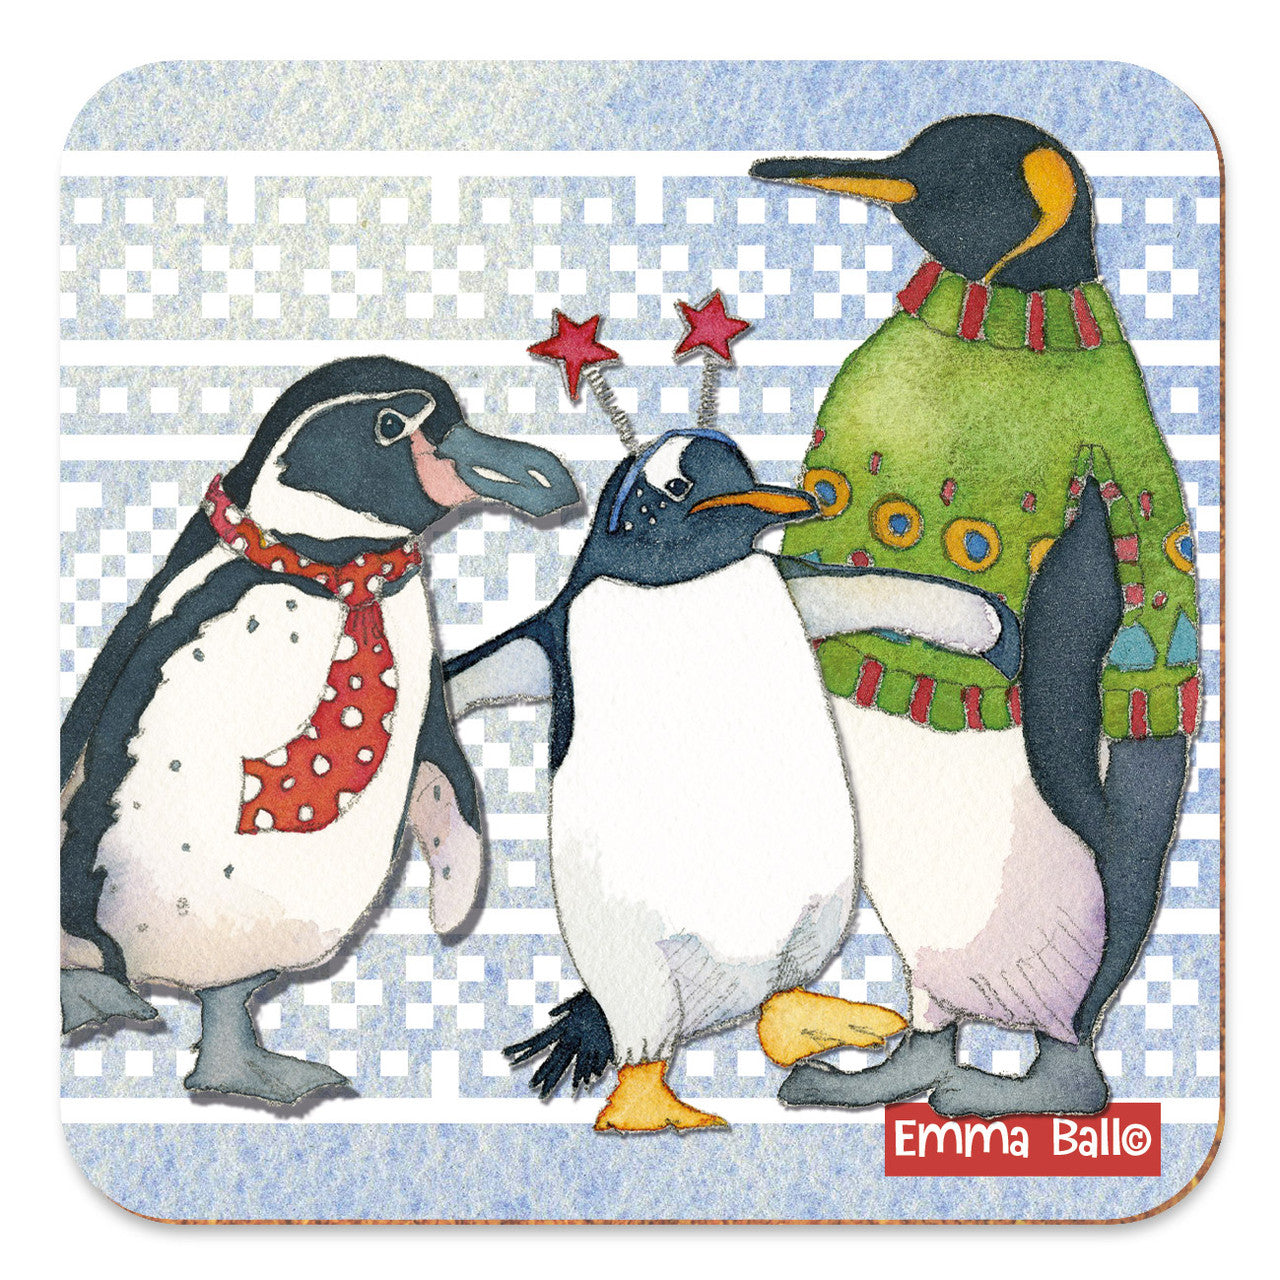 Dancing Penguins Coaster by Emma Ball.